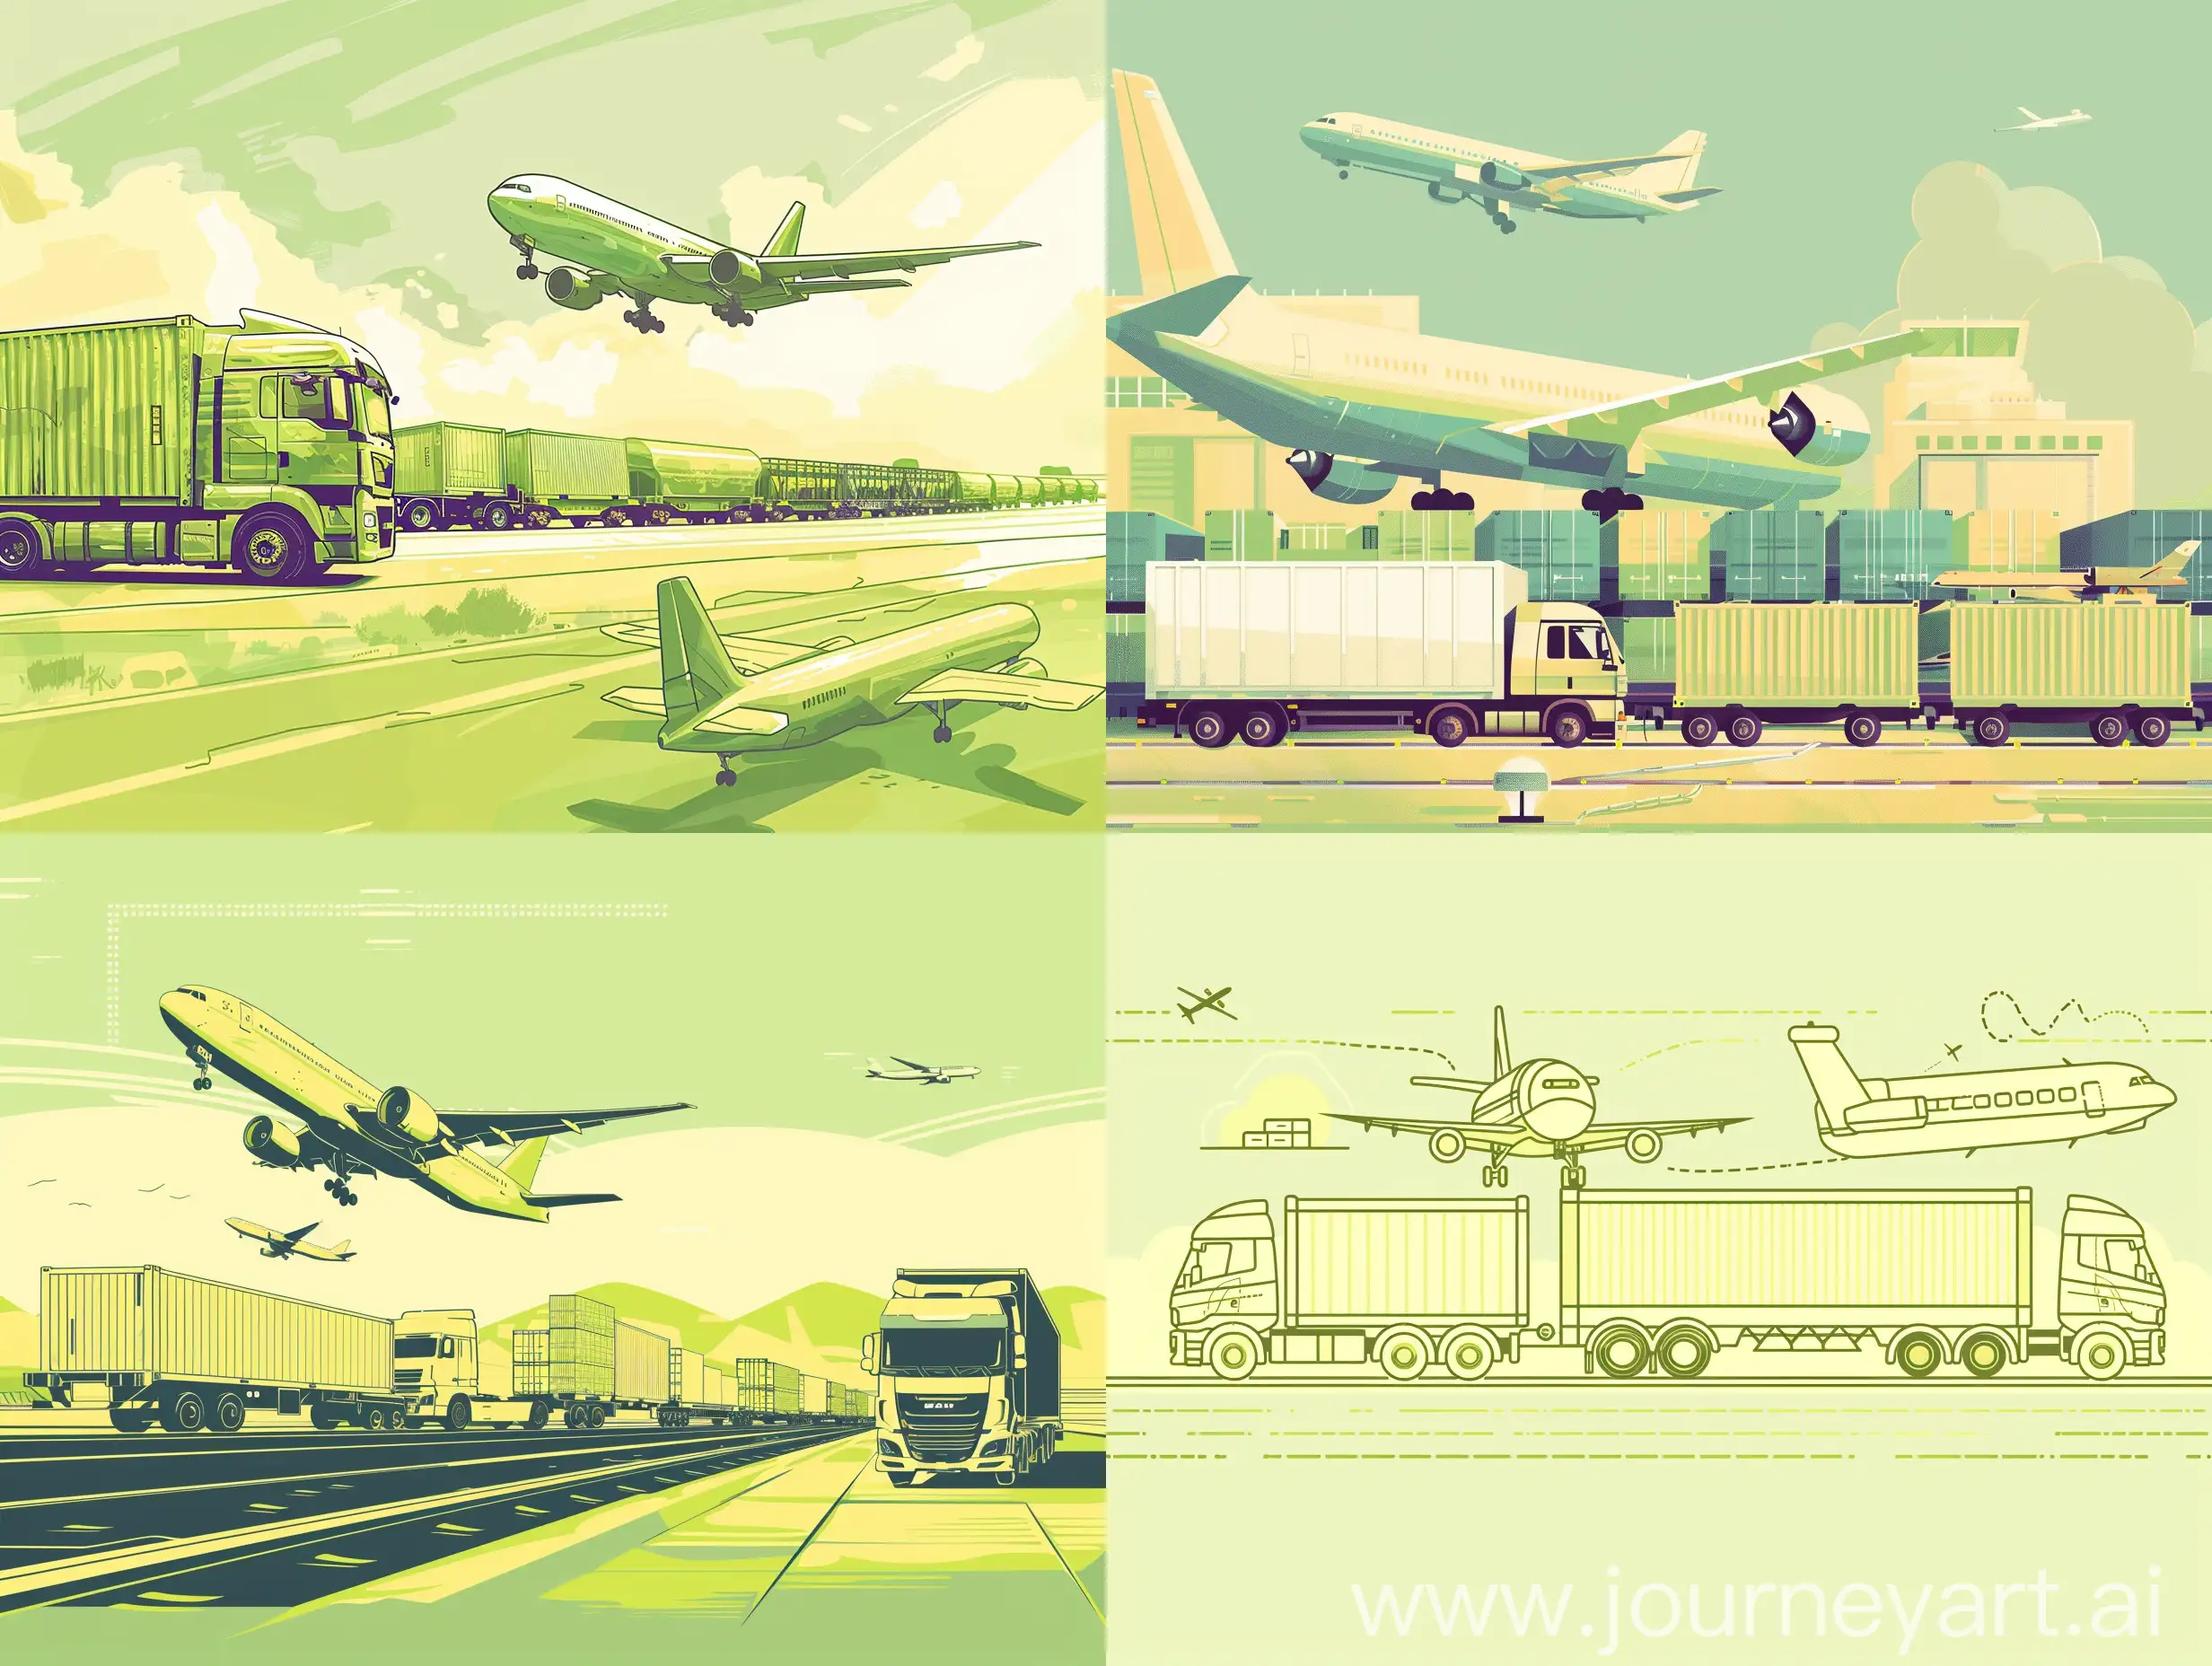 Efficient-Intermodal-Logistics-Shipment-Streamlined-Truck-Train-and-Plane-Transportation